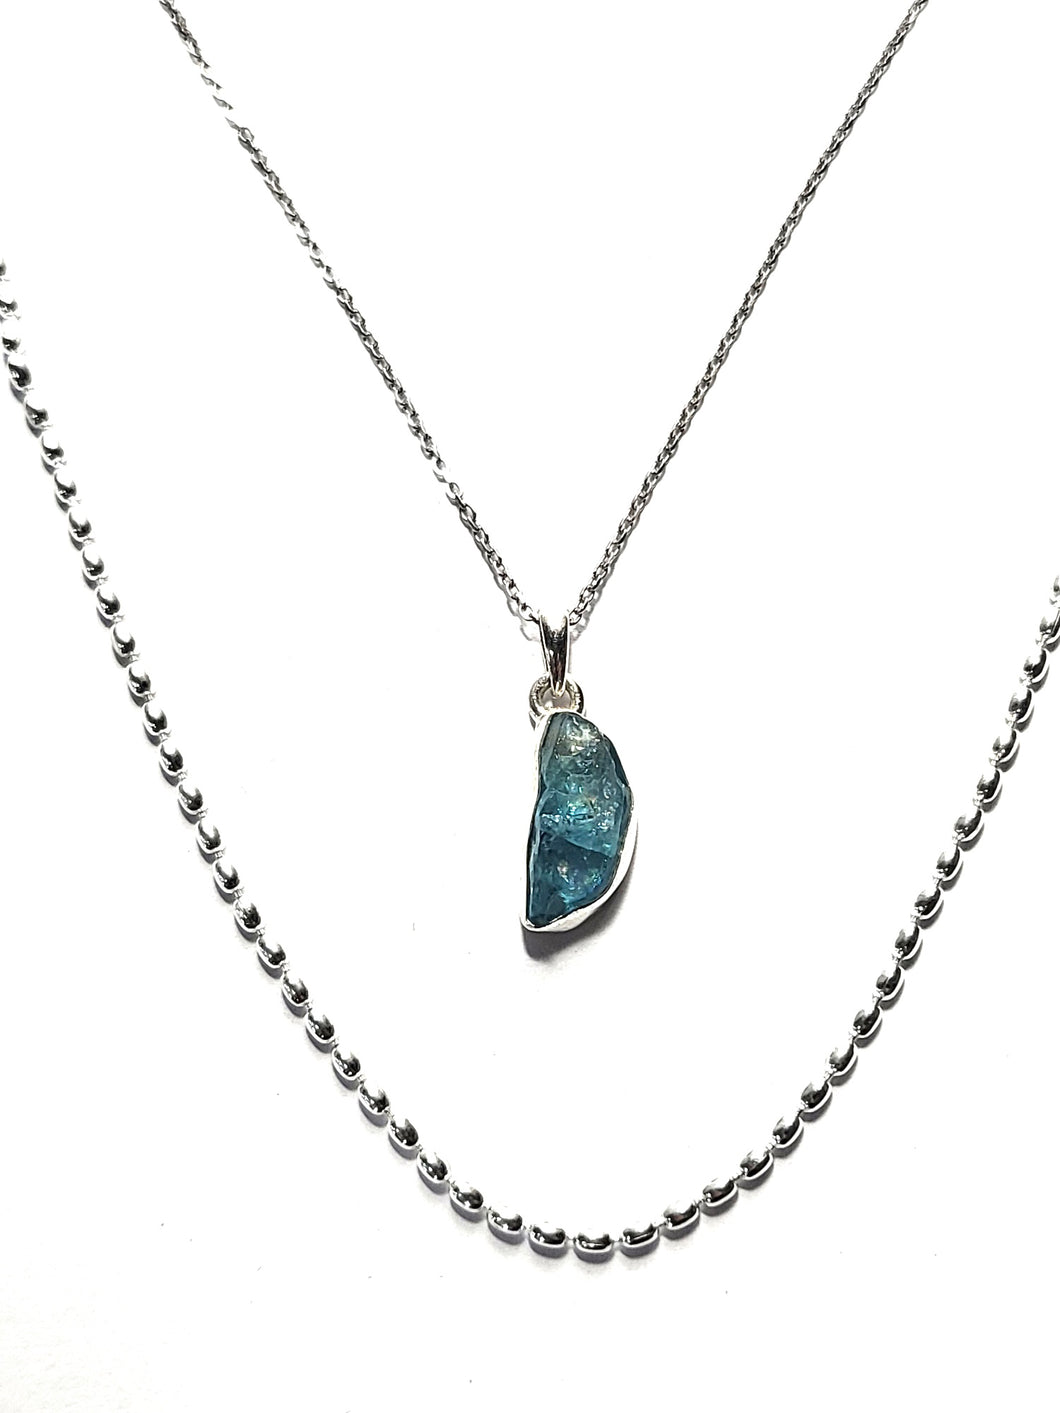 NEW A/T Aquamarine Necklace